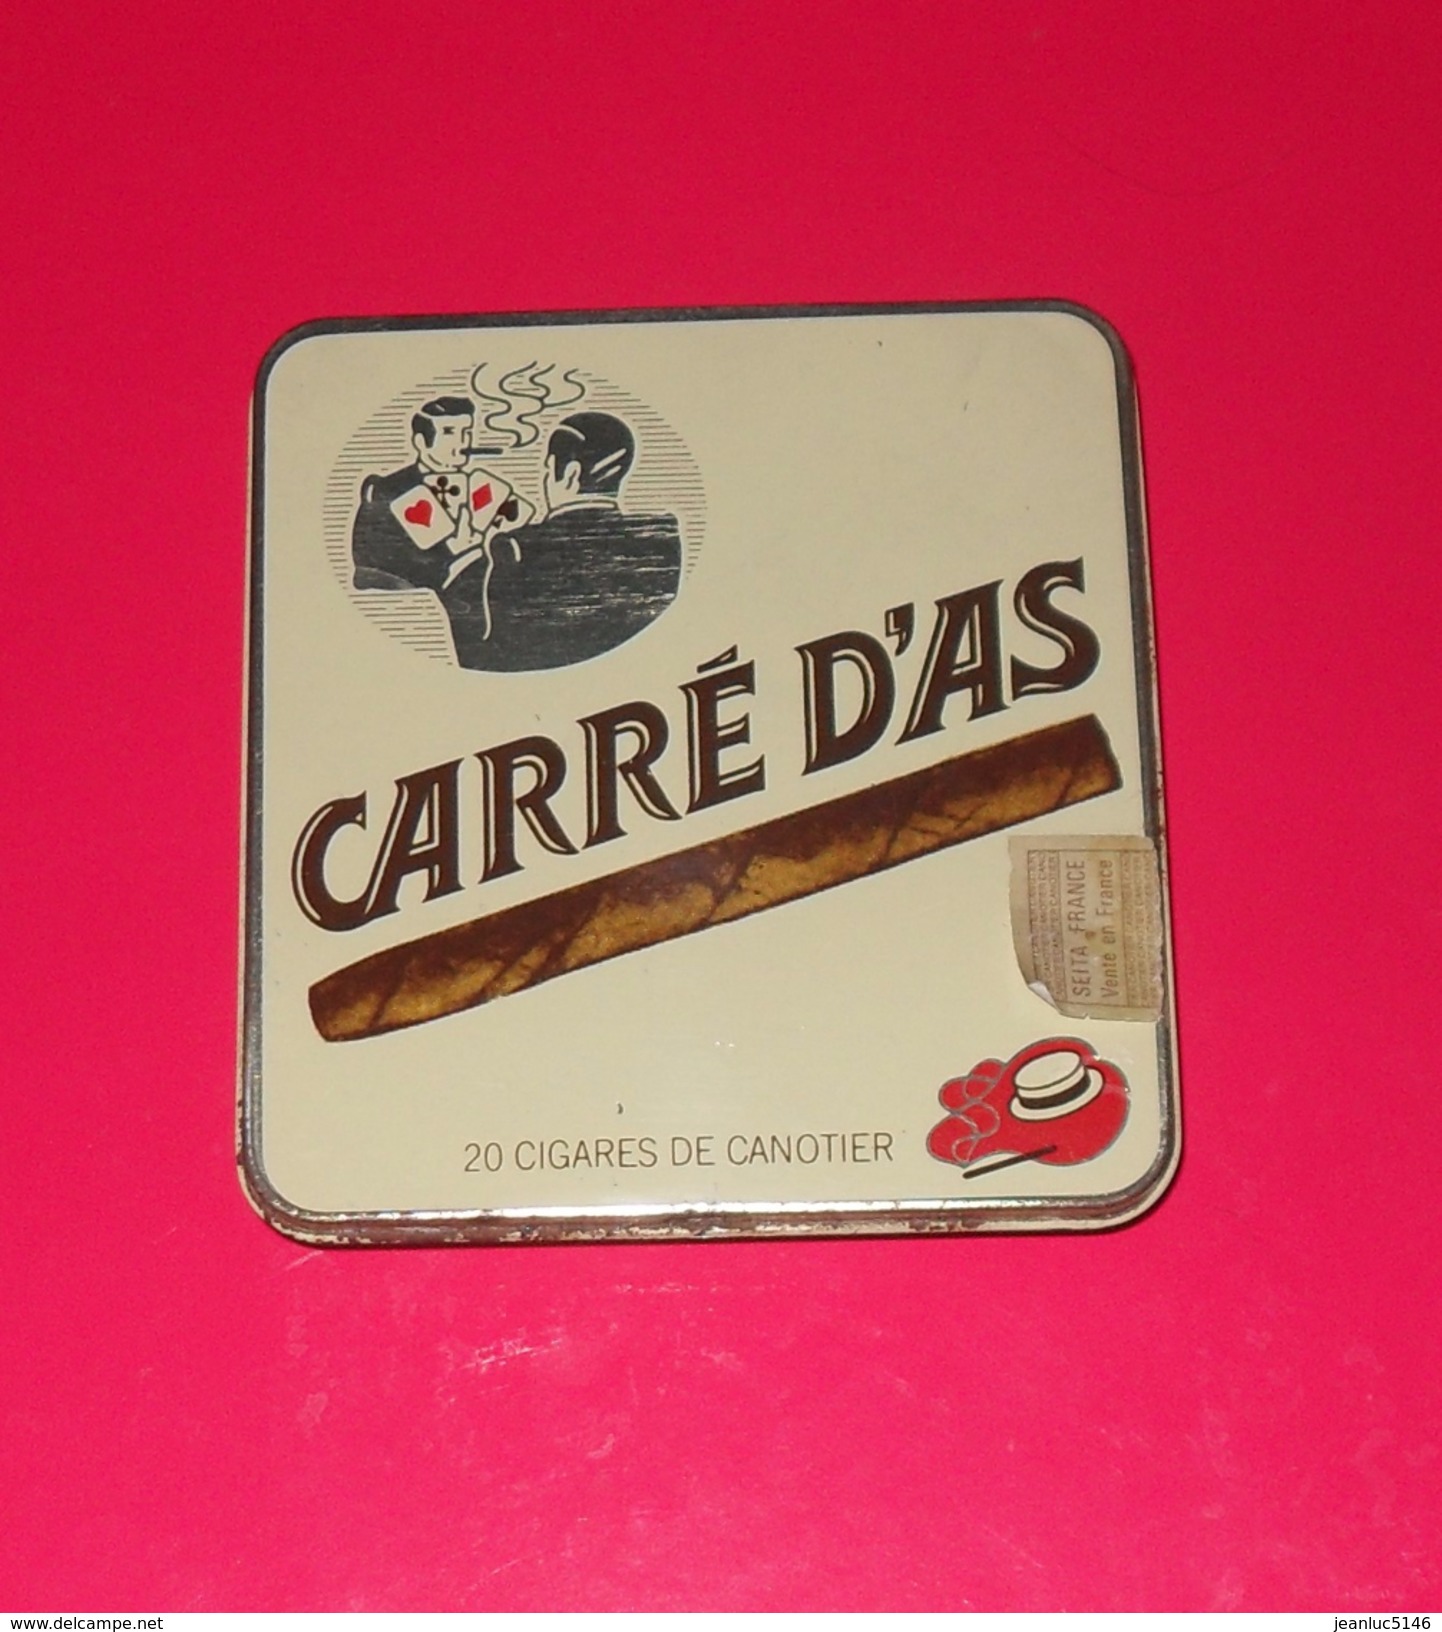 Boîte Métallique. Carré D'as. Cigares De Canotier, SEITA, Années 1960-1970. Reste D'étiquette Seita. - Cigar Cases